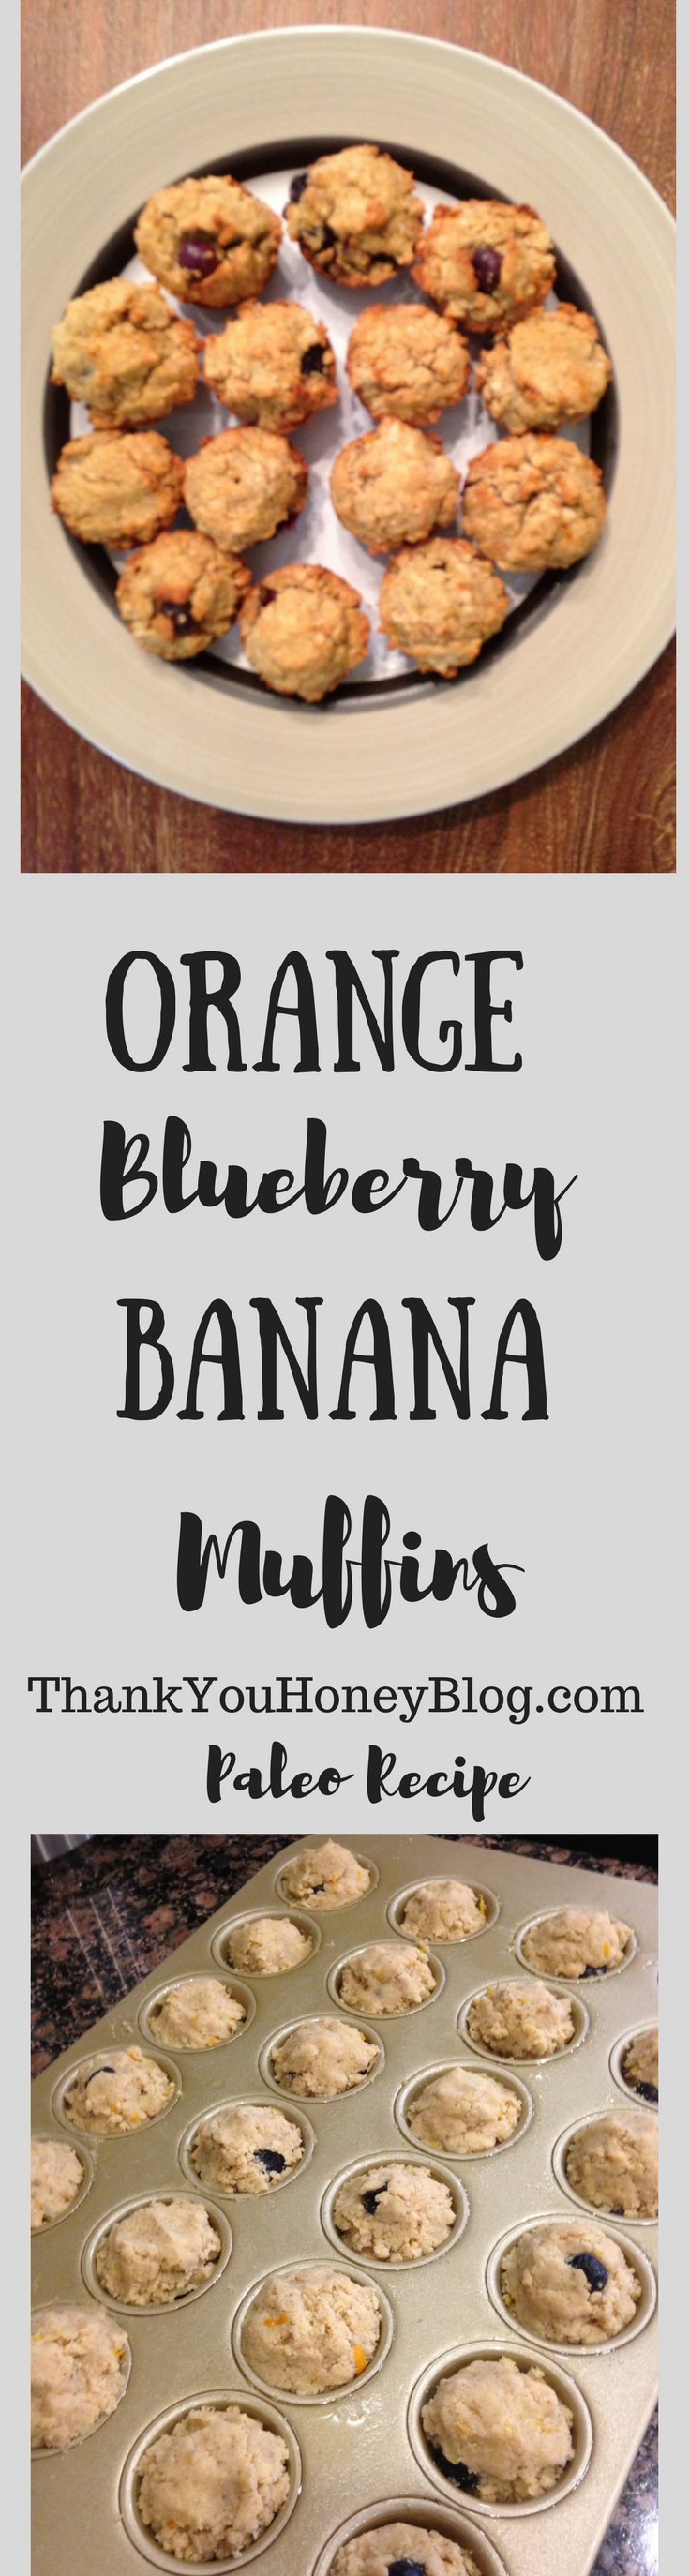 Orange Blueberry Banana Muffins